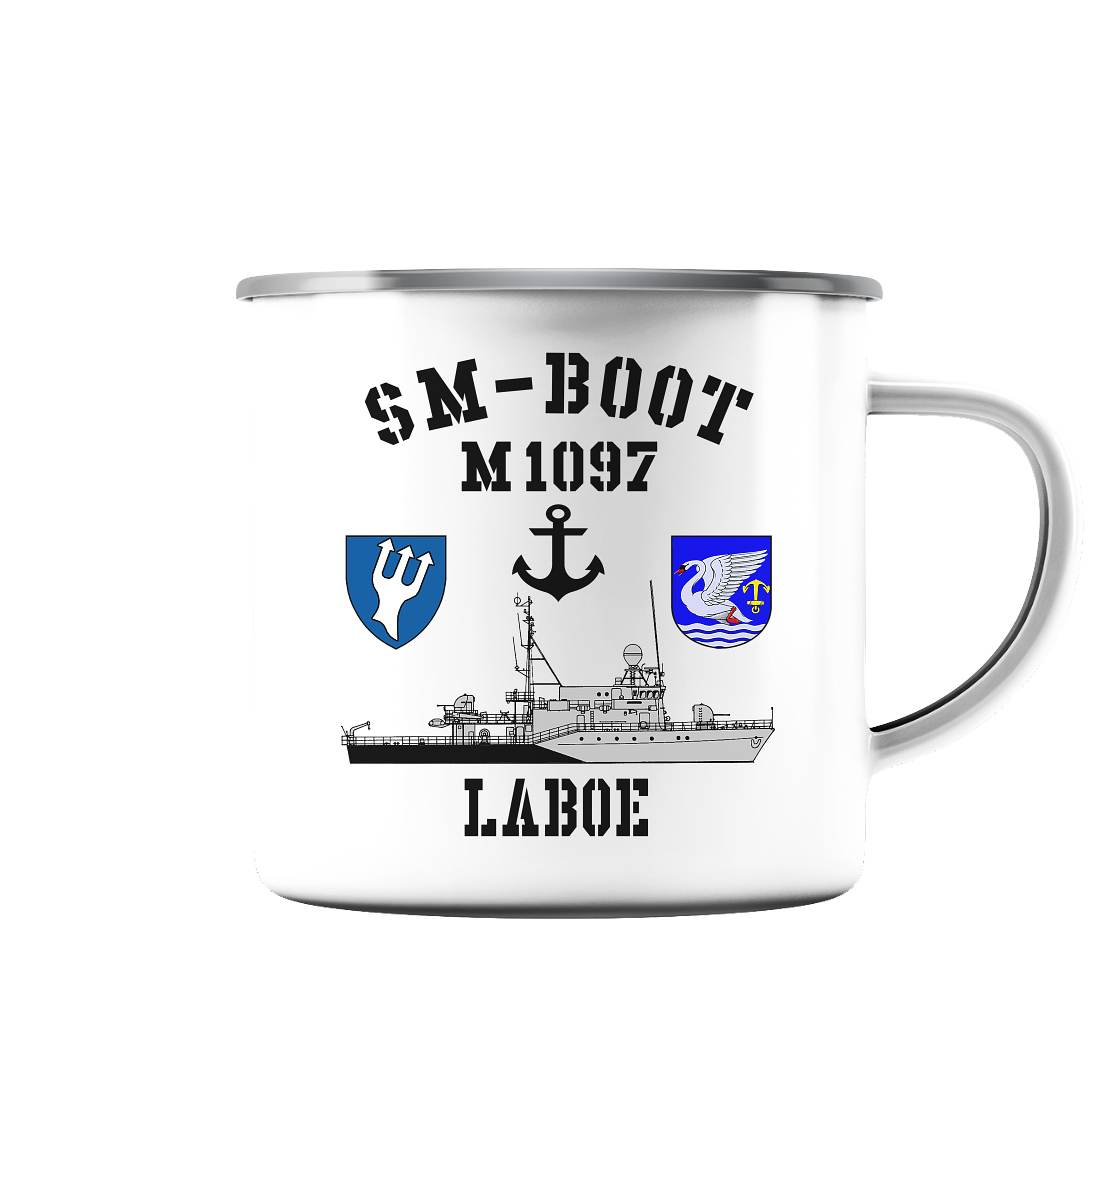 SM-Boot M1097 LABOE Anker - Emaille Tasse (Silber)